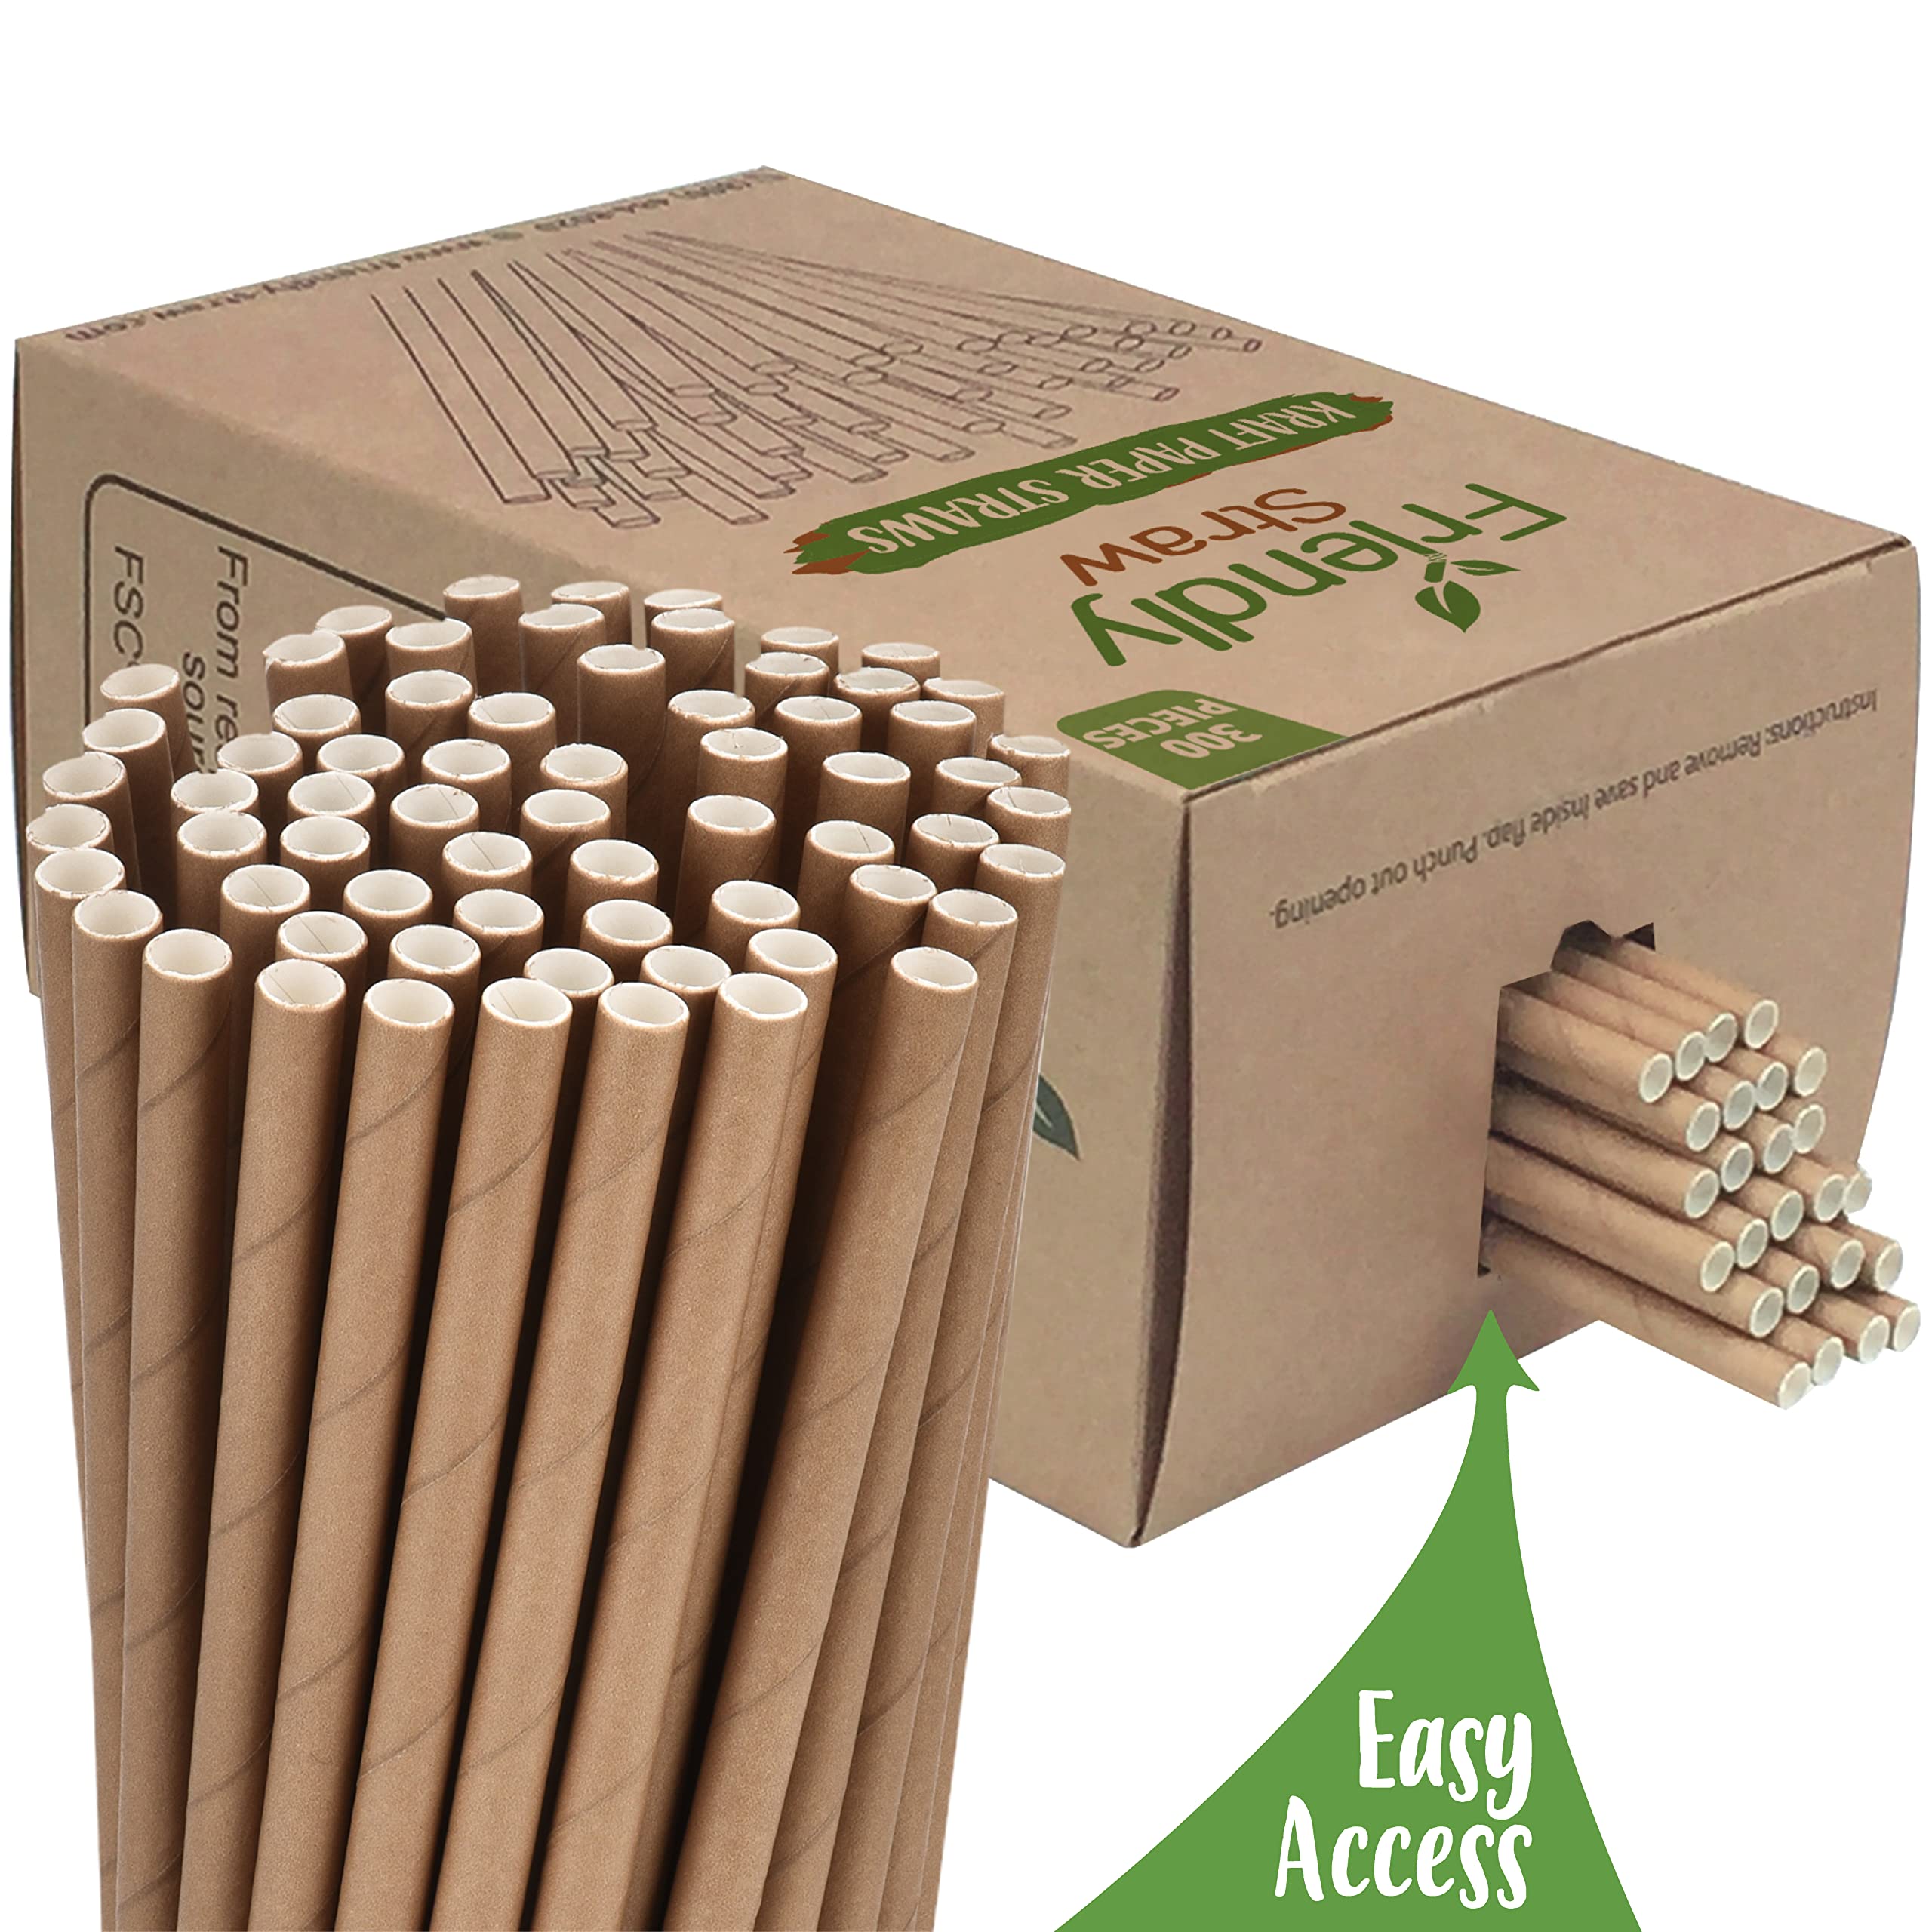 Friendly Straw 300 Pack Biodegradable Kraft Paper Straws, 7.75" x .25" Drinking Paper Straw Bulk Pack